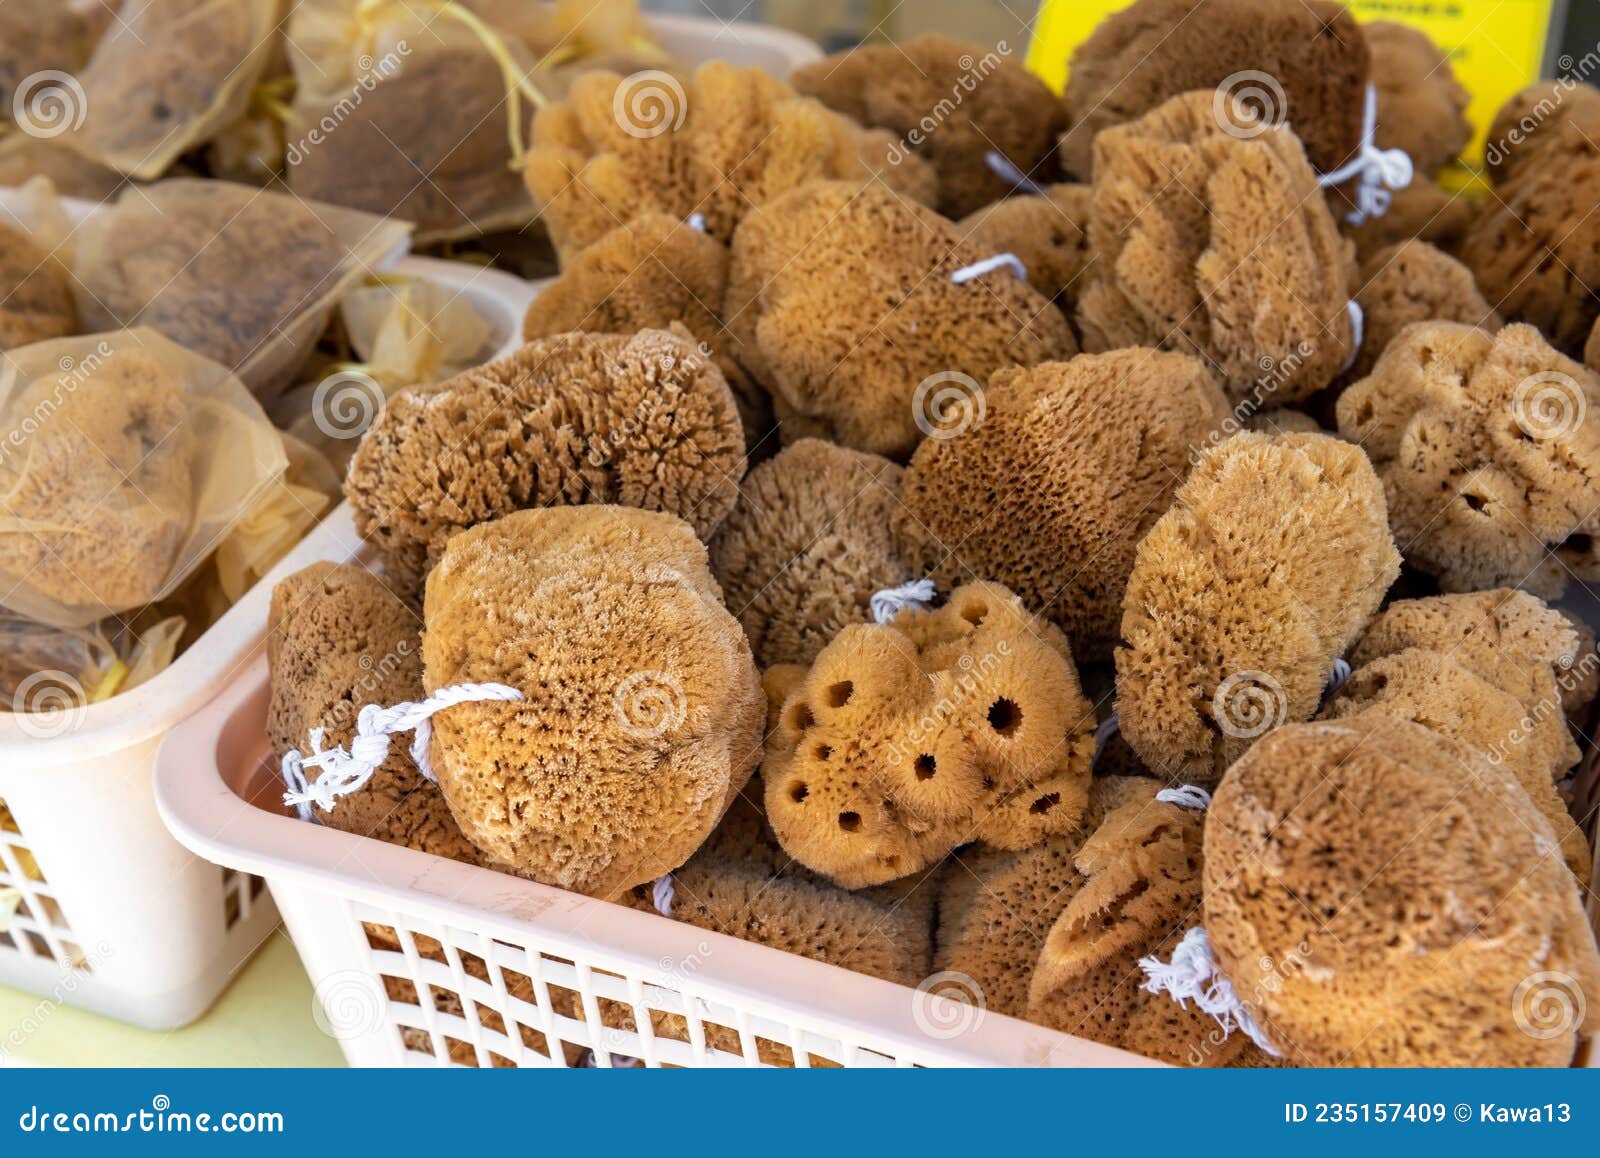 Natural Sponges 